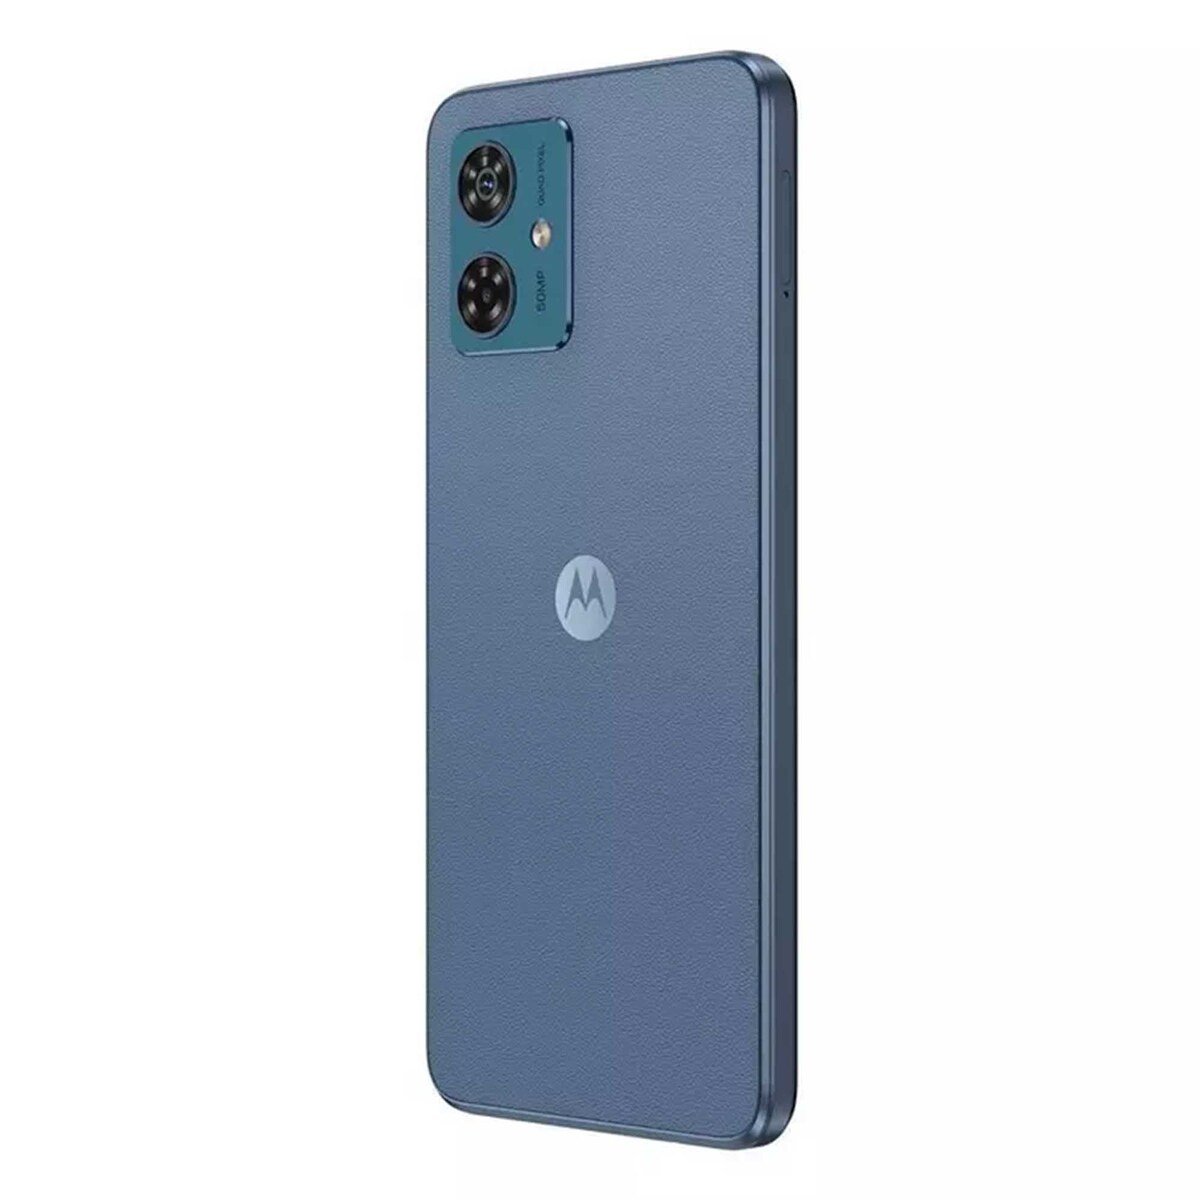 Motorola G54 5G Smartphone, 8 GB RAM, 256 GB Storage, Indigo Blue